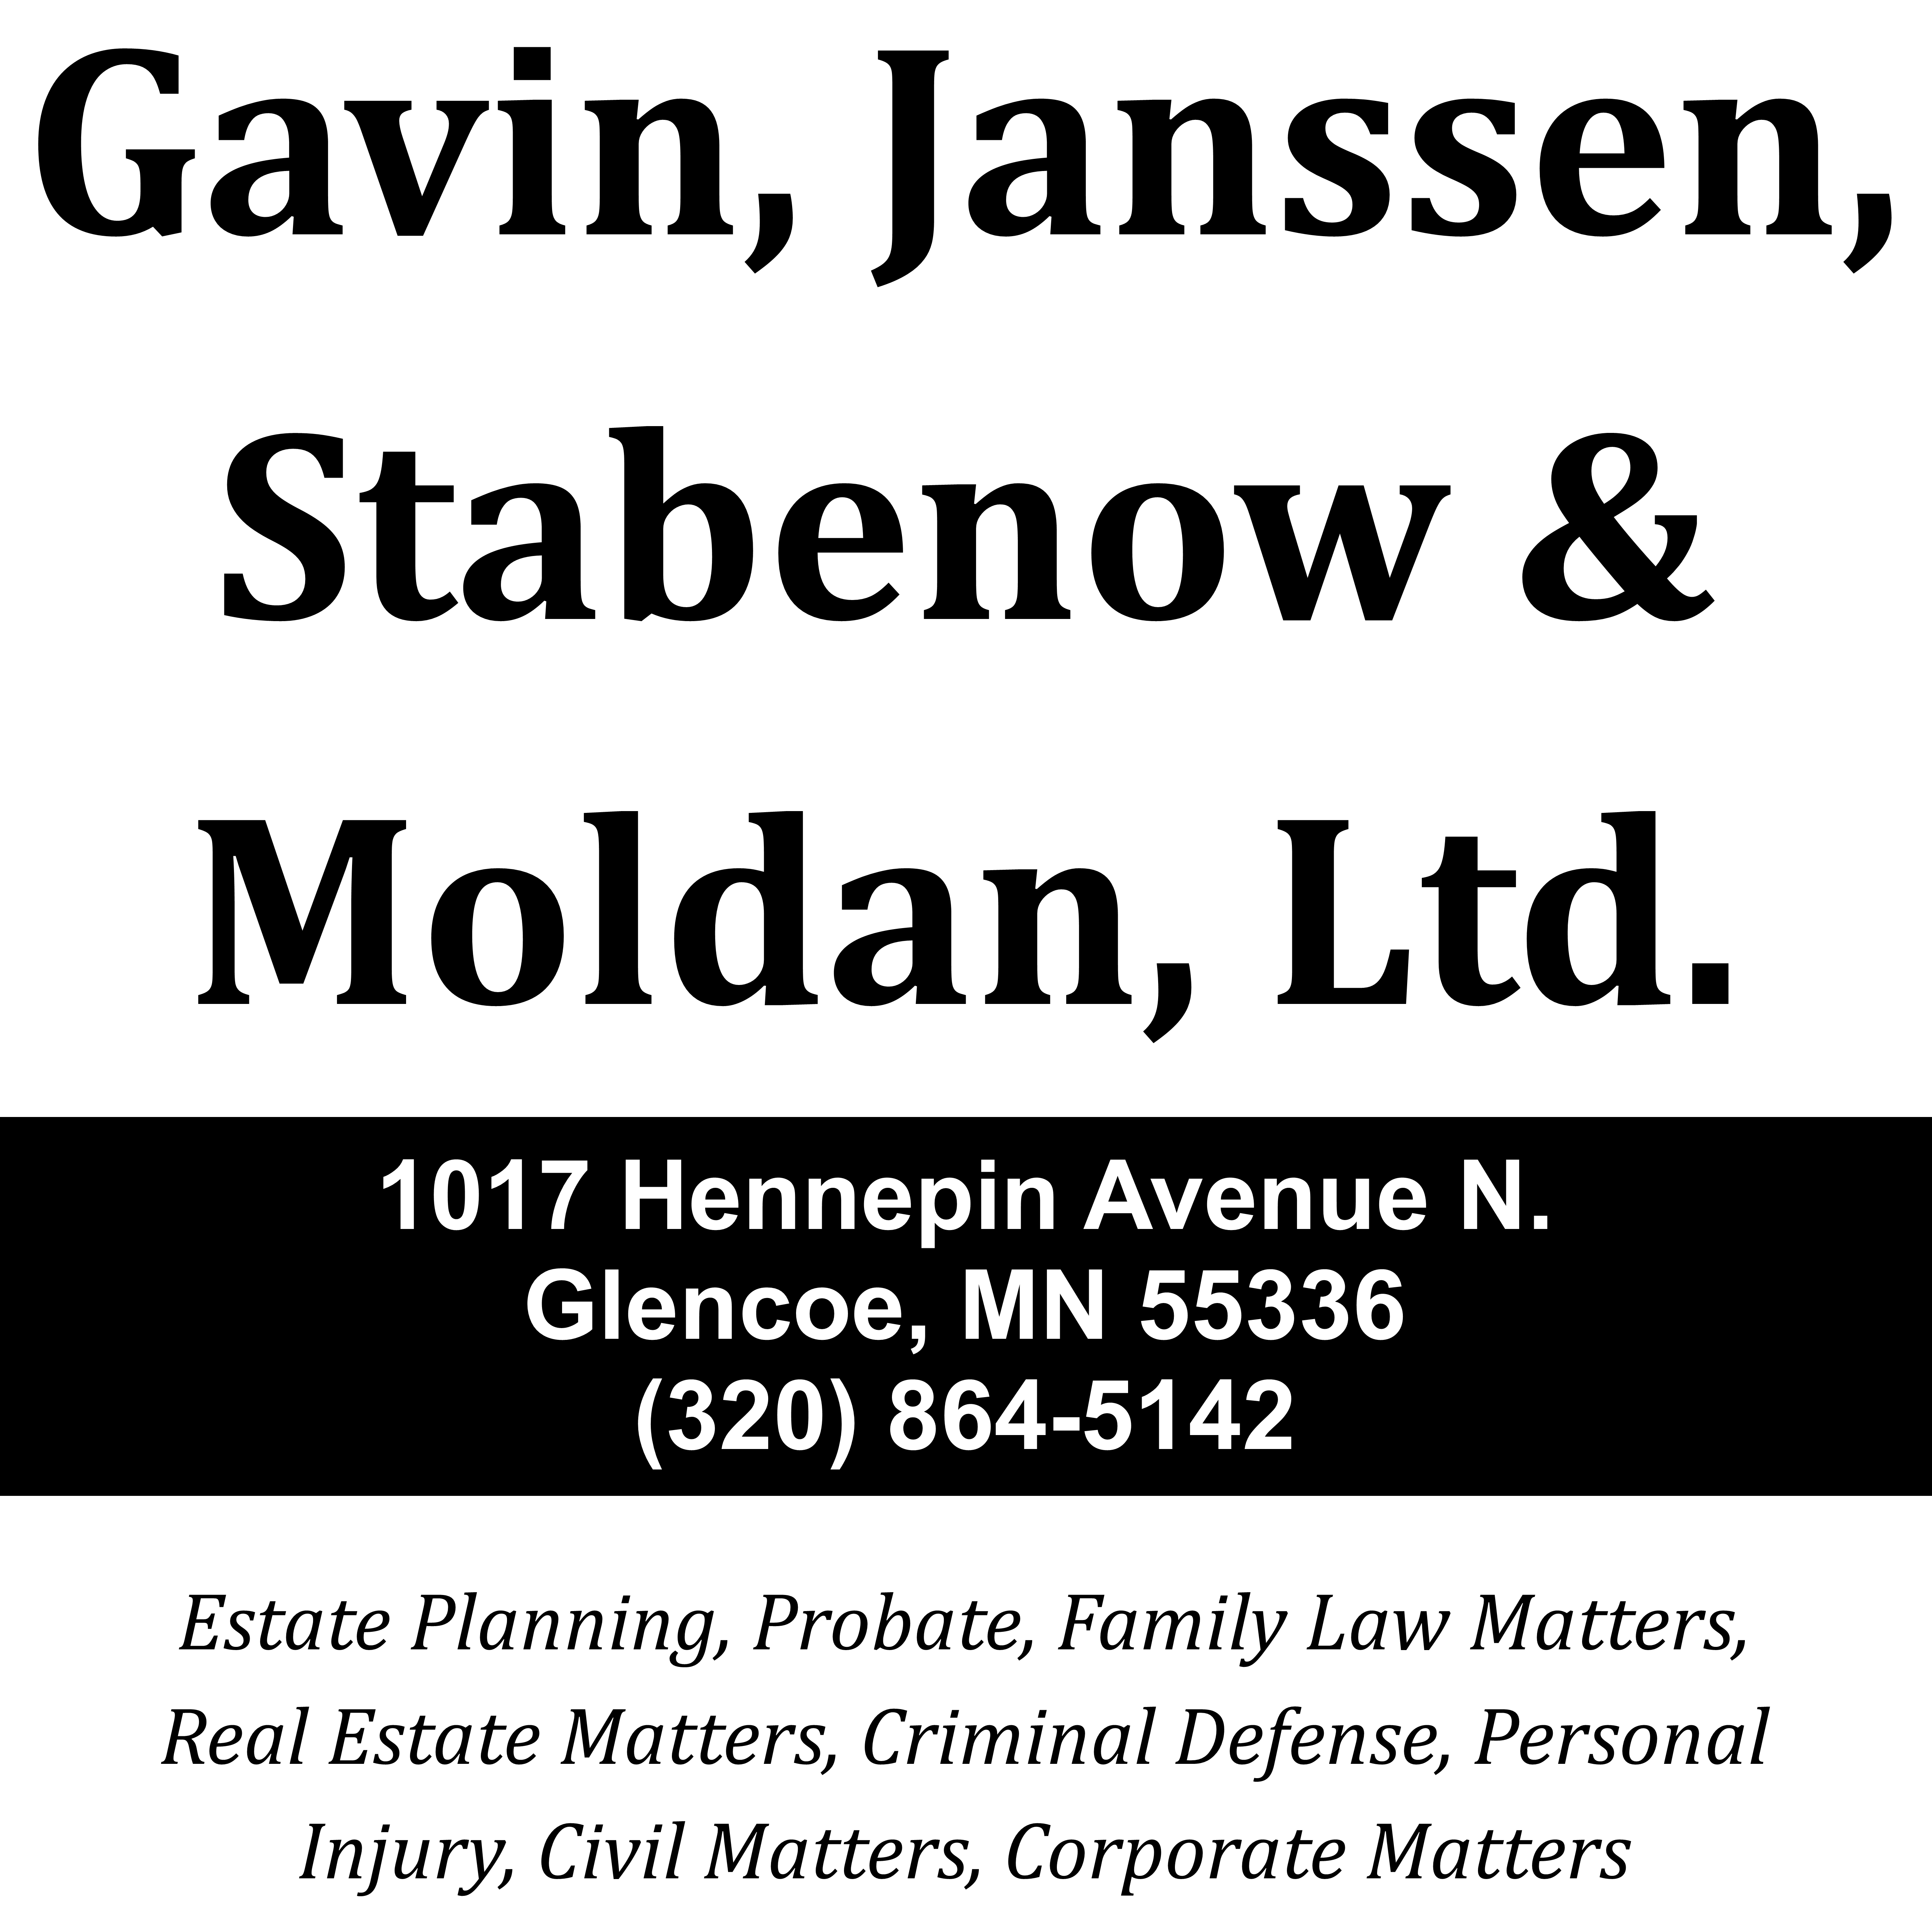 Gavin, Janssen, Stabenow & Moldan, Ltd.